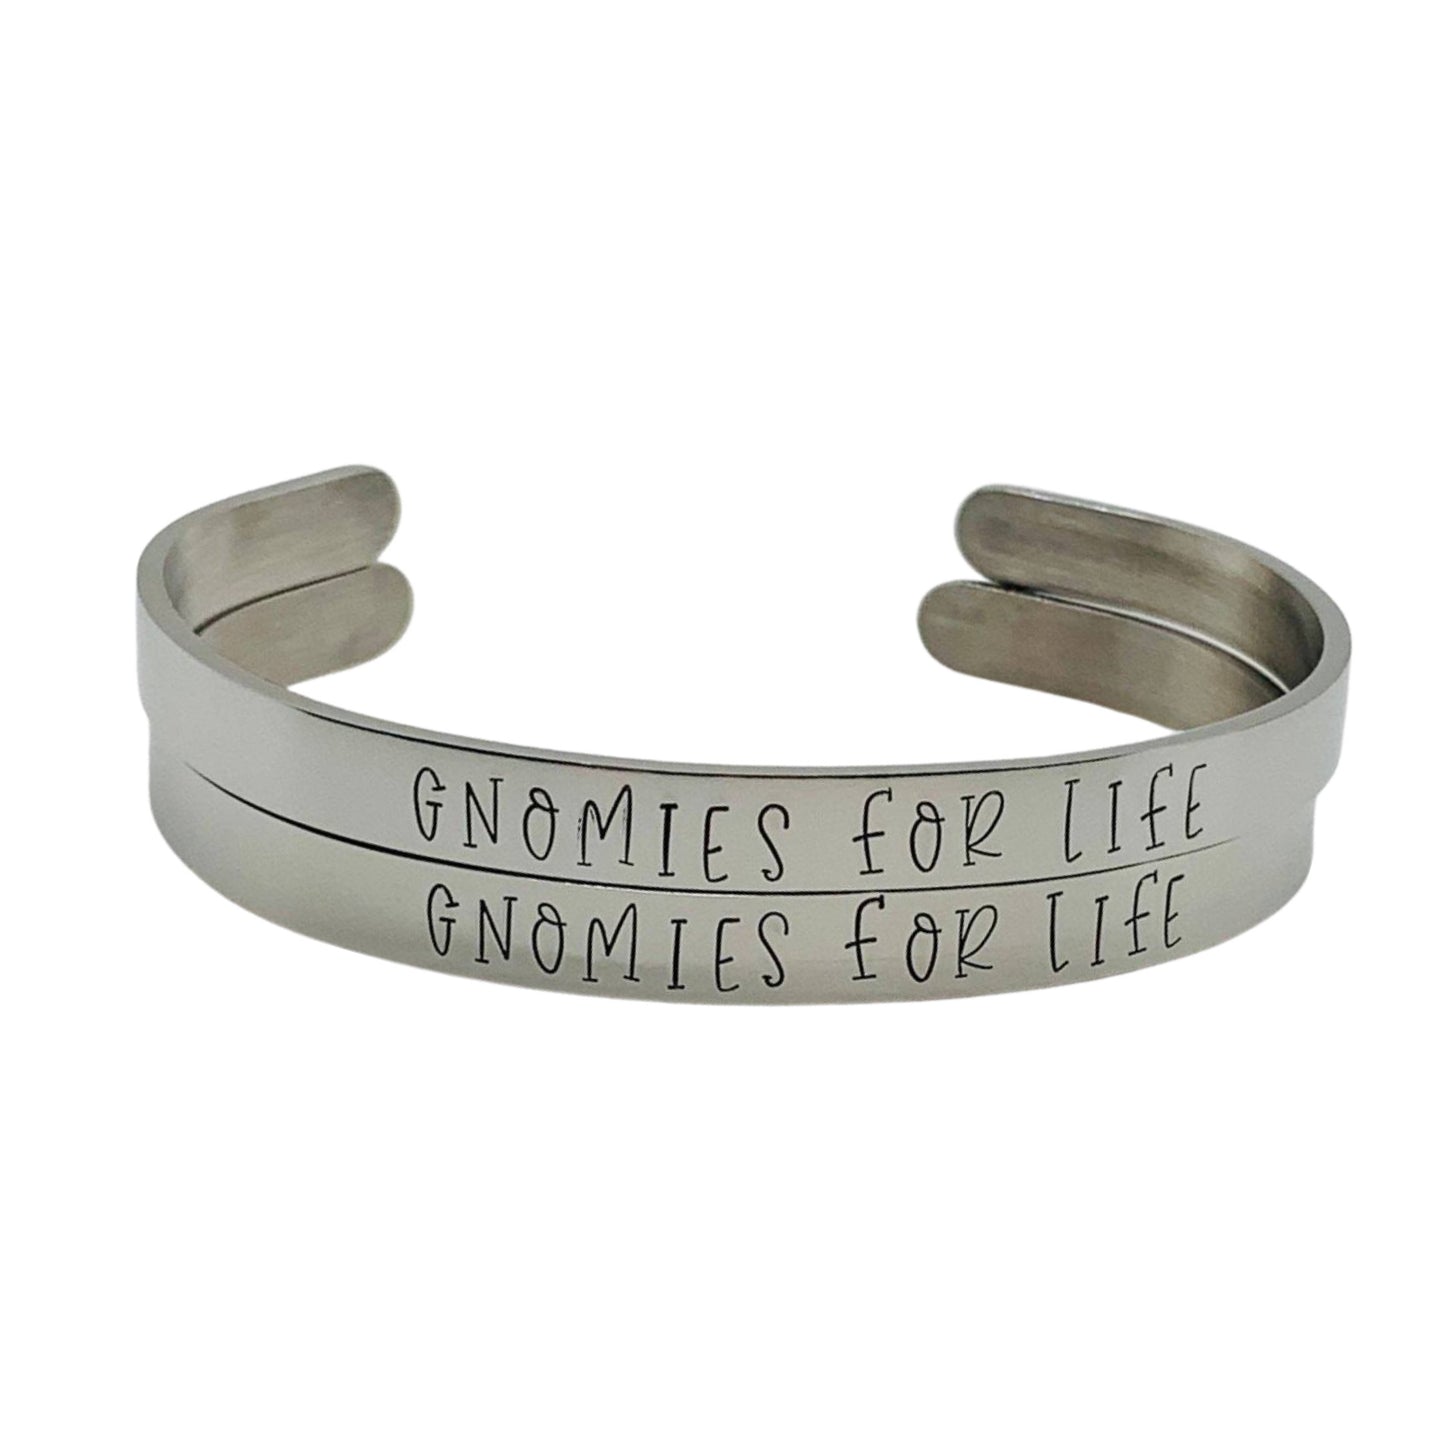 Gnomies for Life - Cuff Bracelet